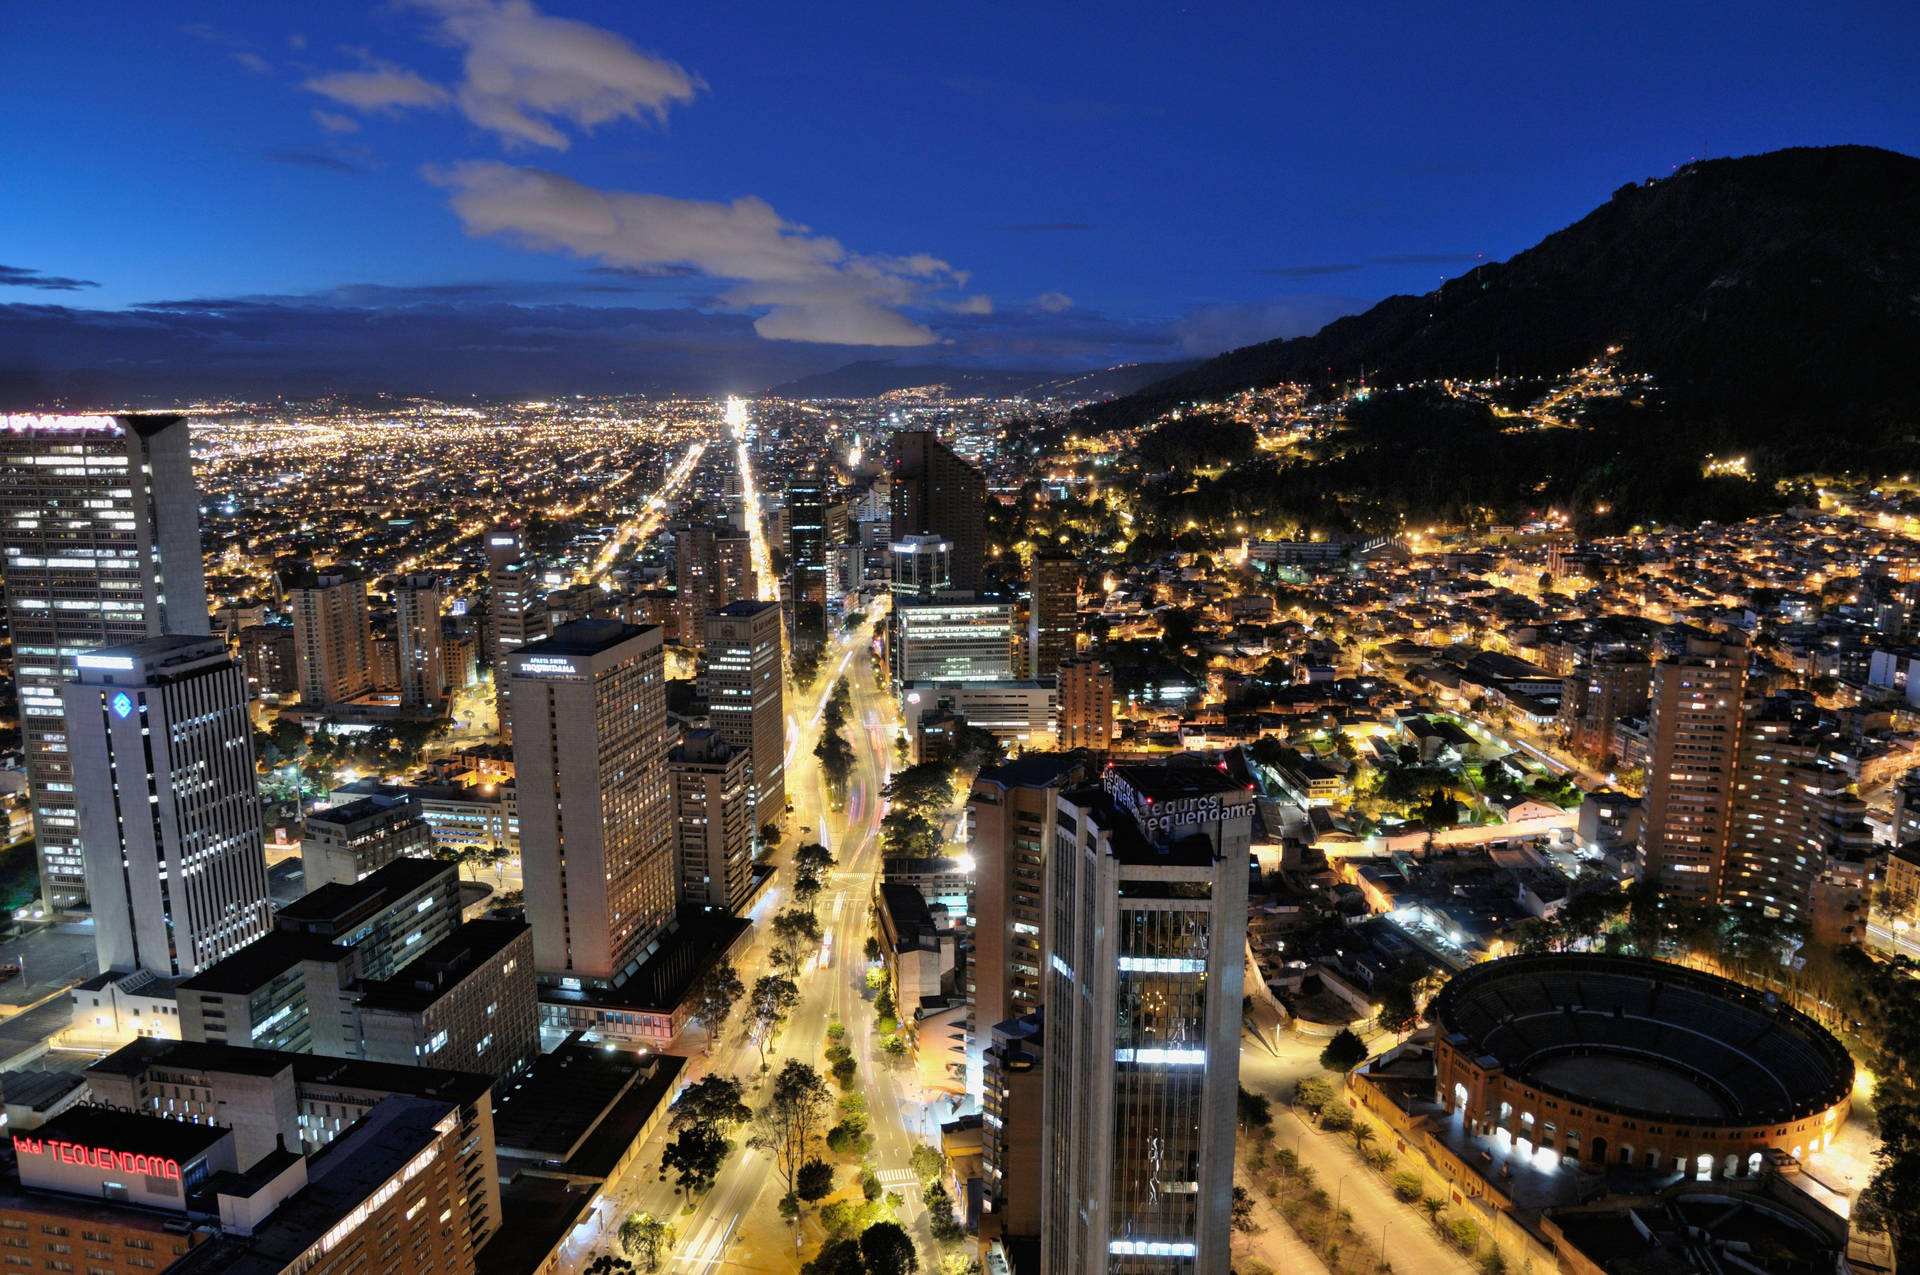 Illuminated roads of Bogota at night Wallpaper